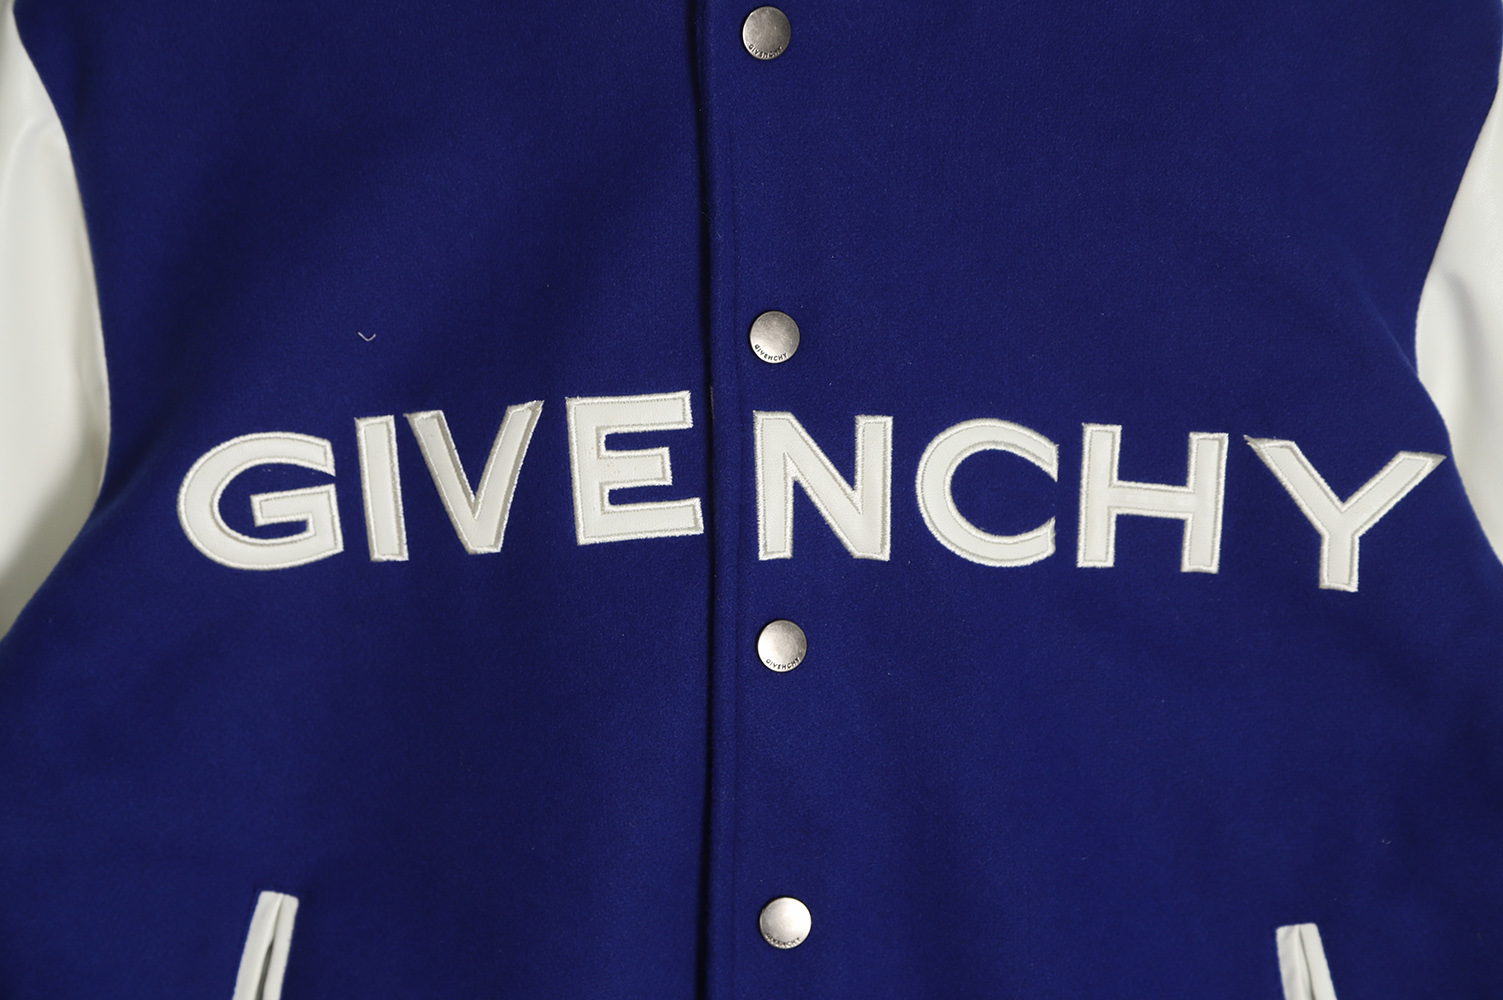 Givenchy 21FW stitching ma1 baseball uniform